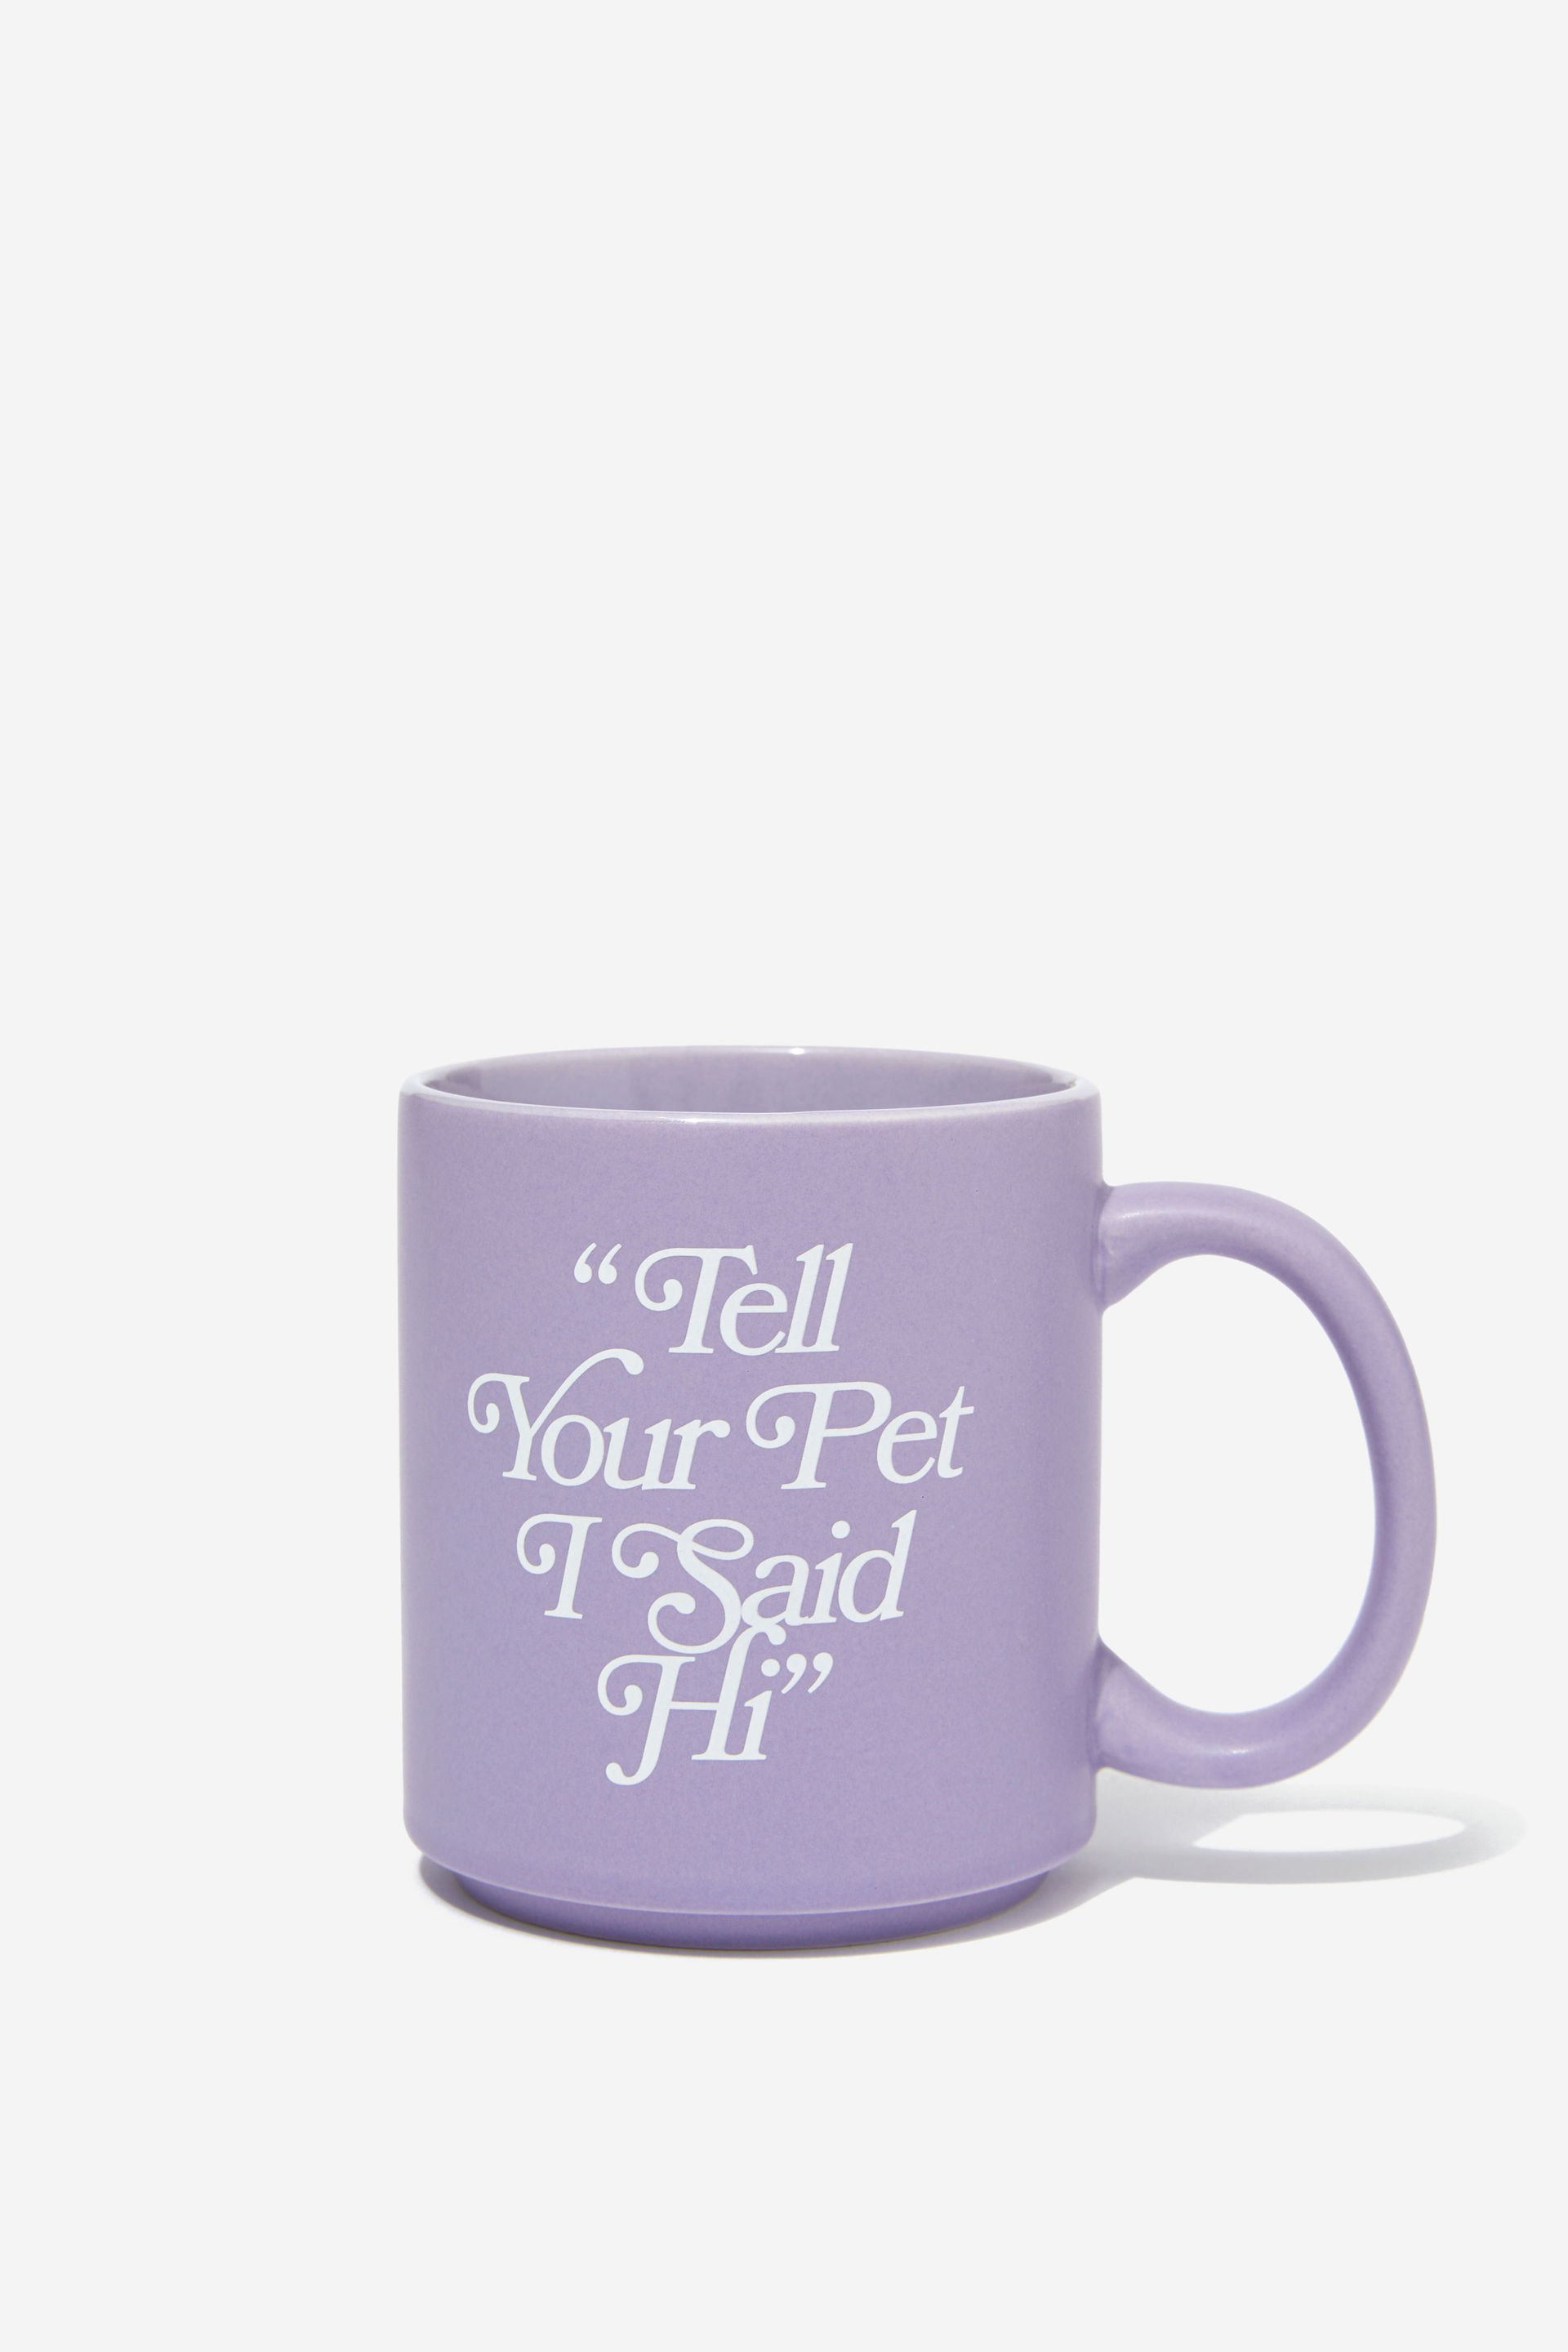 Typo - Daily Mug - Tell your pet